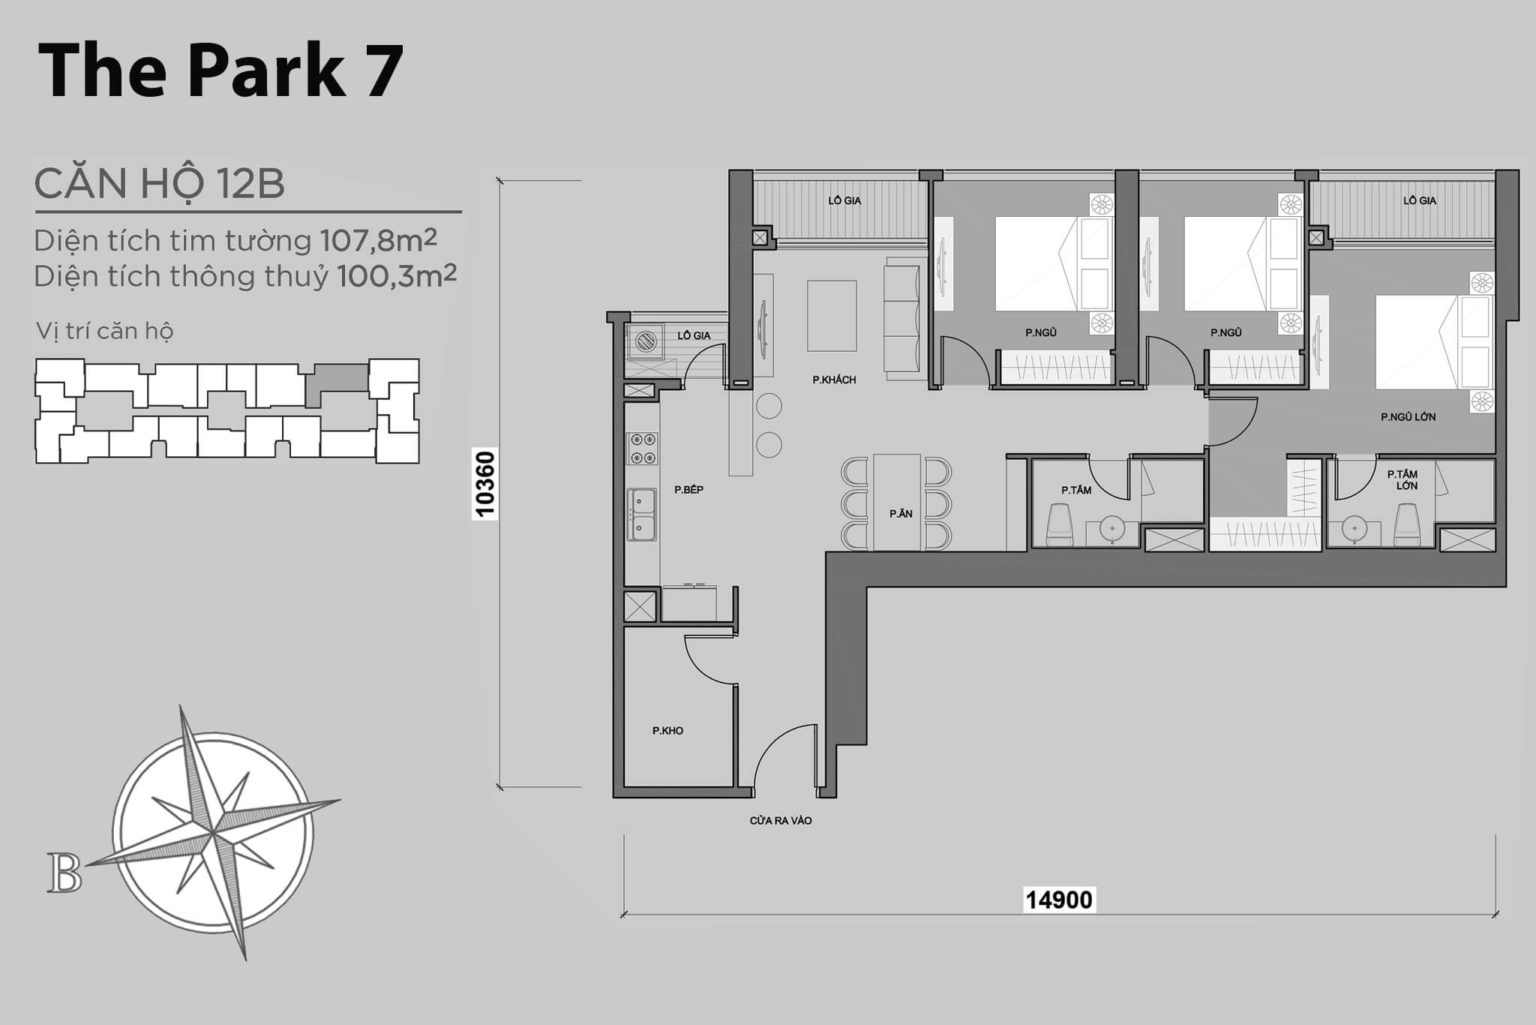 202301/02/10/071329-mat-bang-layout-park-7-p7-12b-1536x1025.jpg